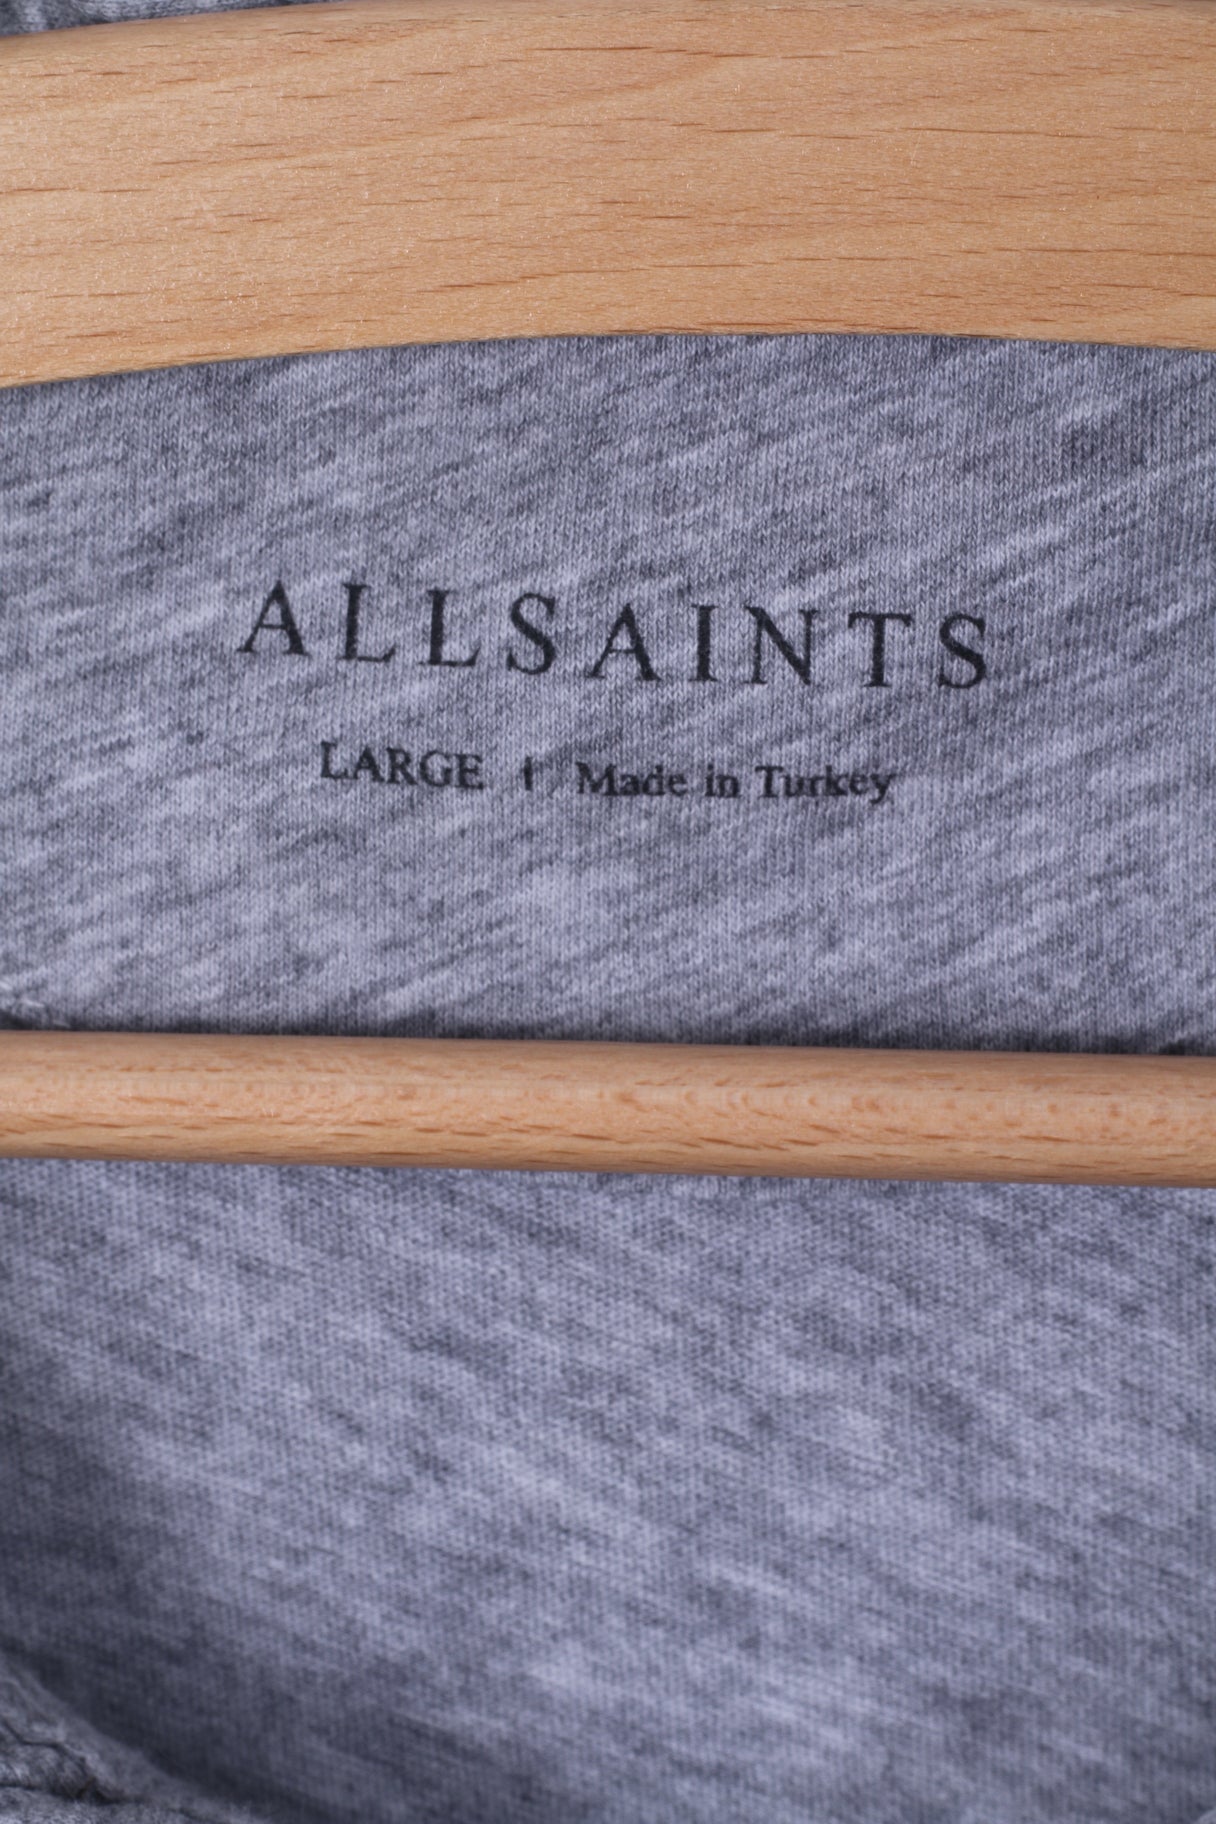 All Saints Mens S Polo Shirt Grey Cotton Stretch Short Sleeve